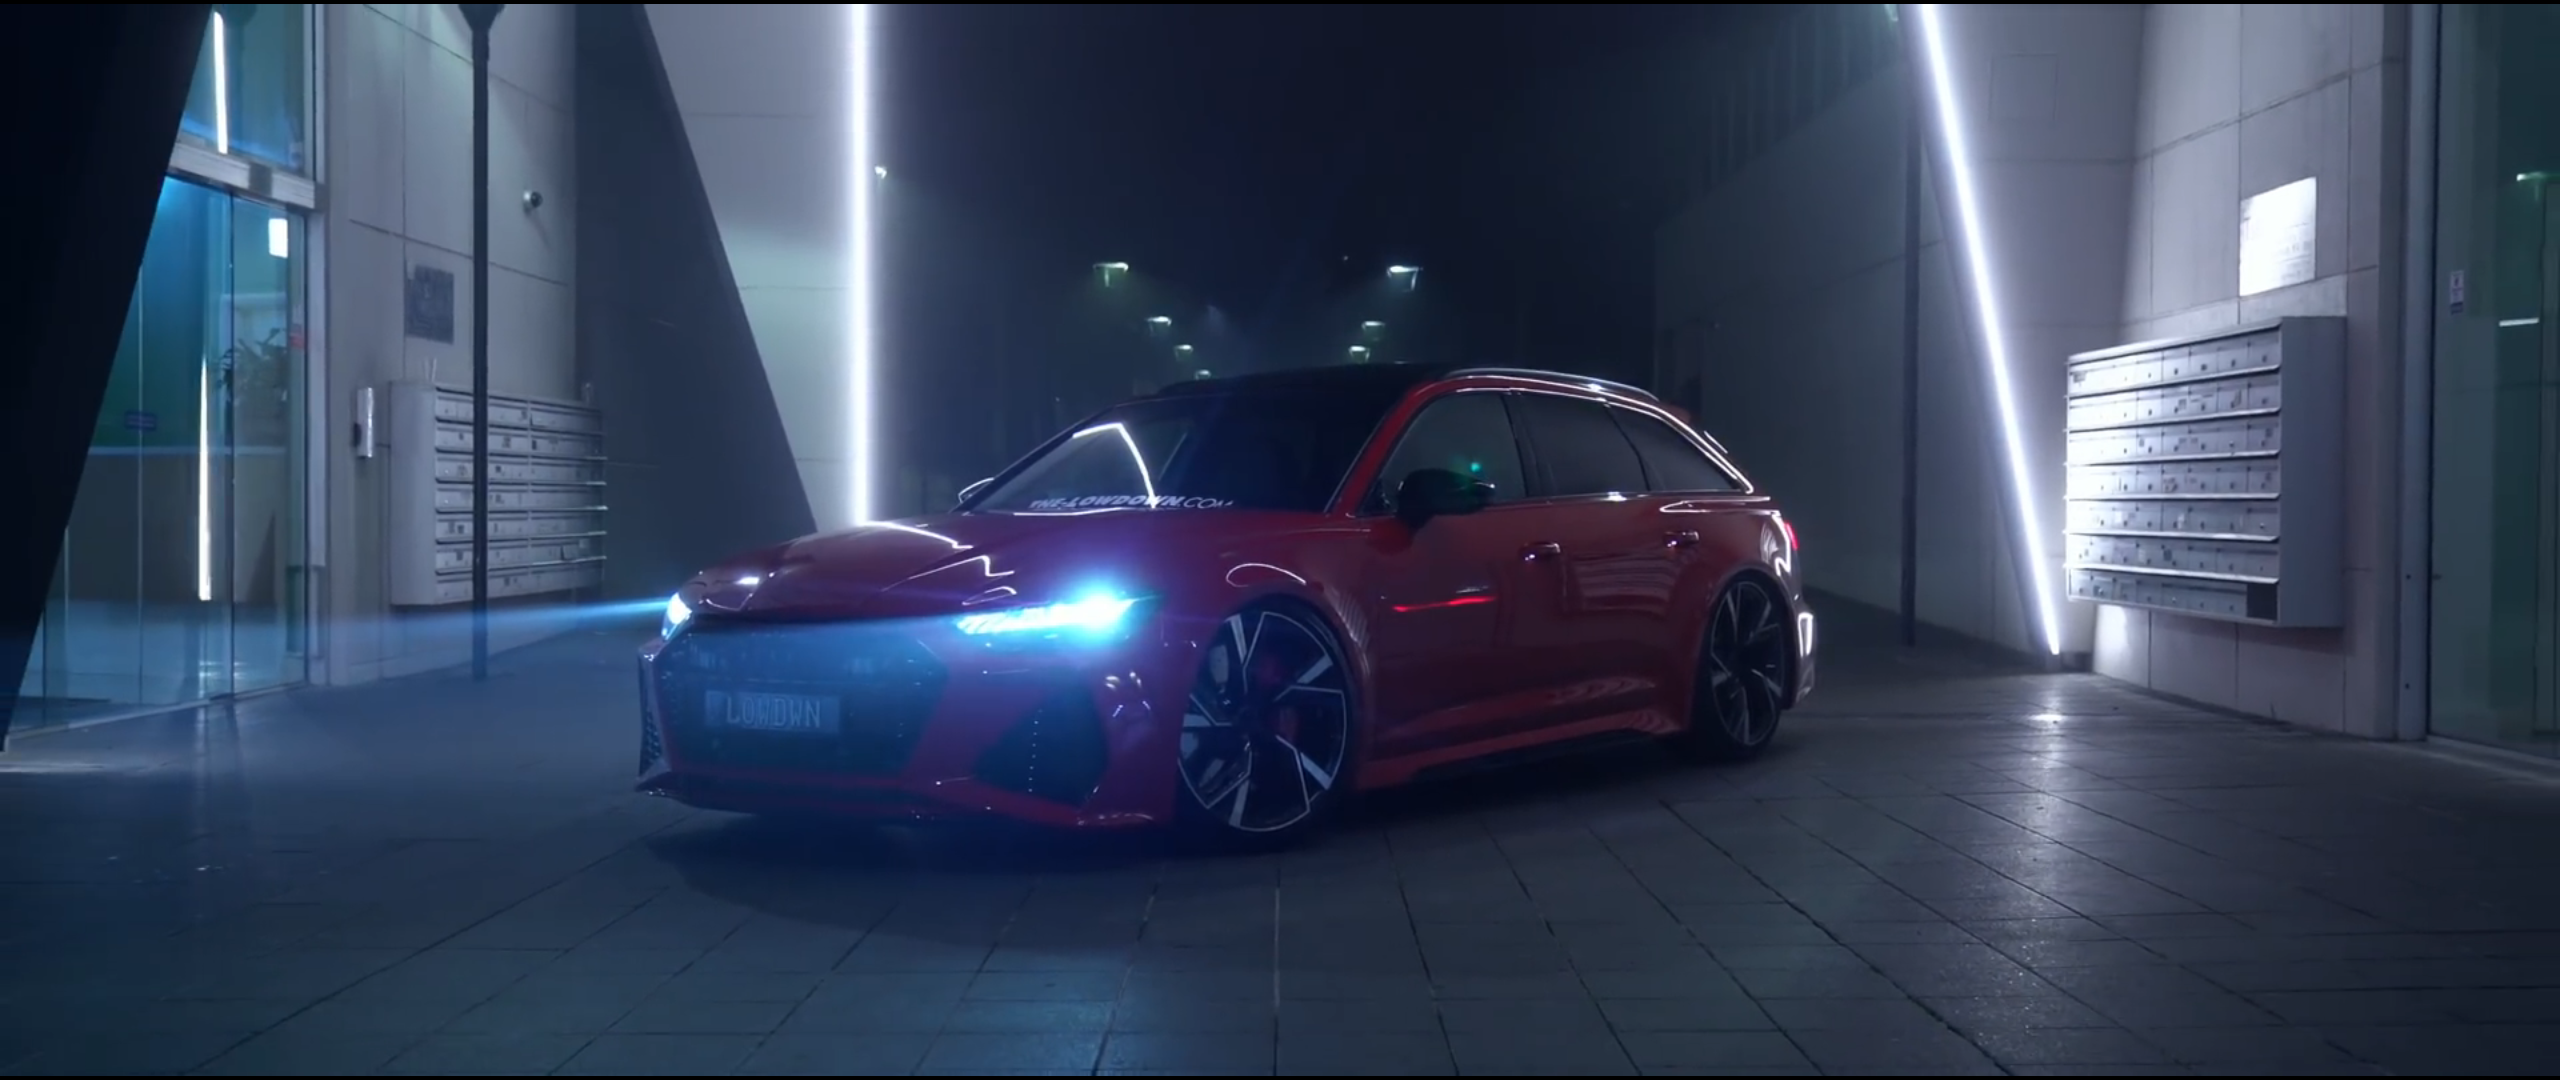 Bwm M4 And Audi Rs6 Car Car Interior Night Nightdrive Tokou Anime Games Audi RS6 Avant 2560x1080